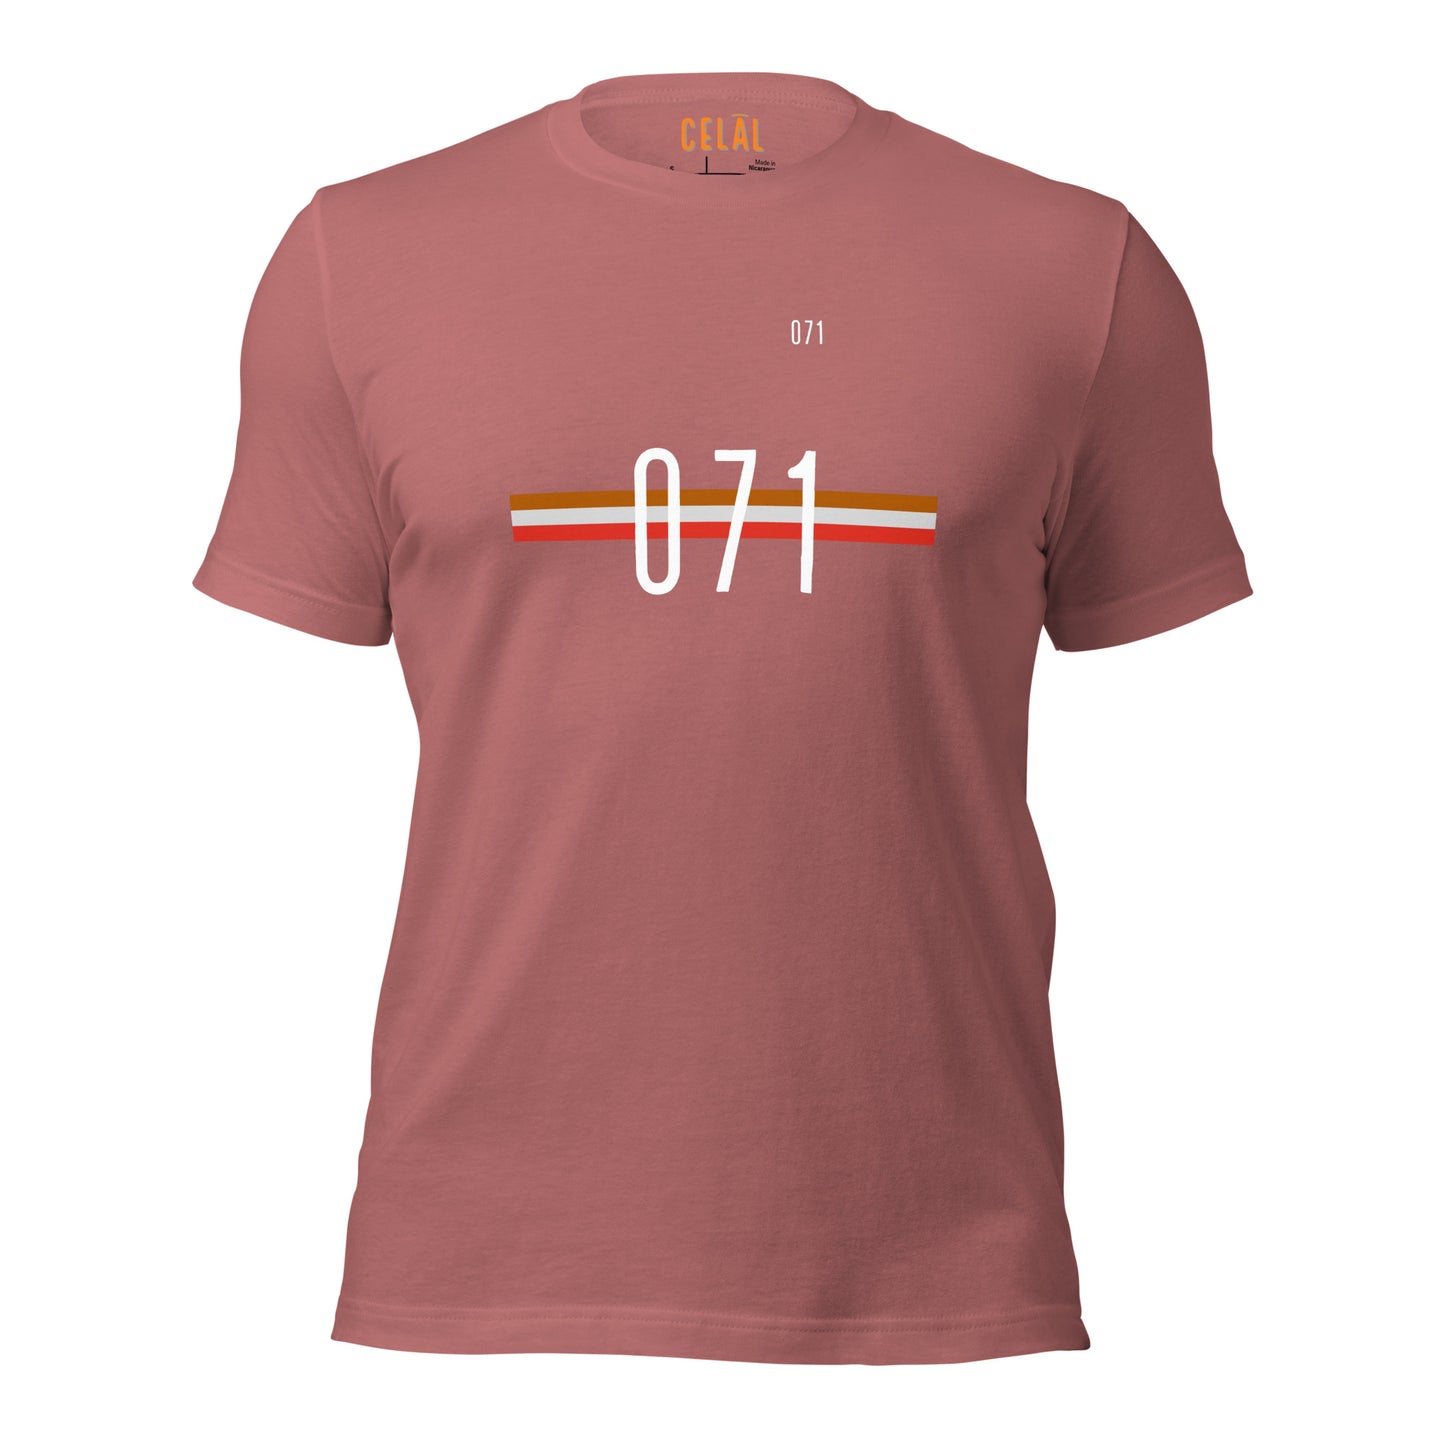 071 Unisex t-shirt